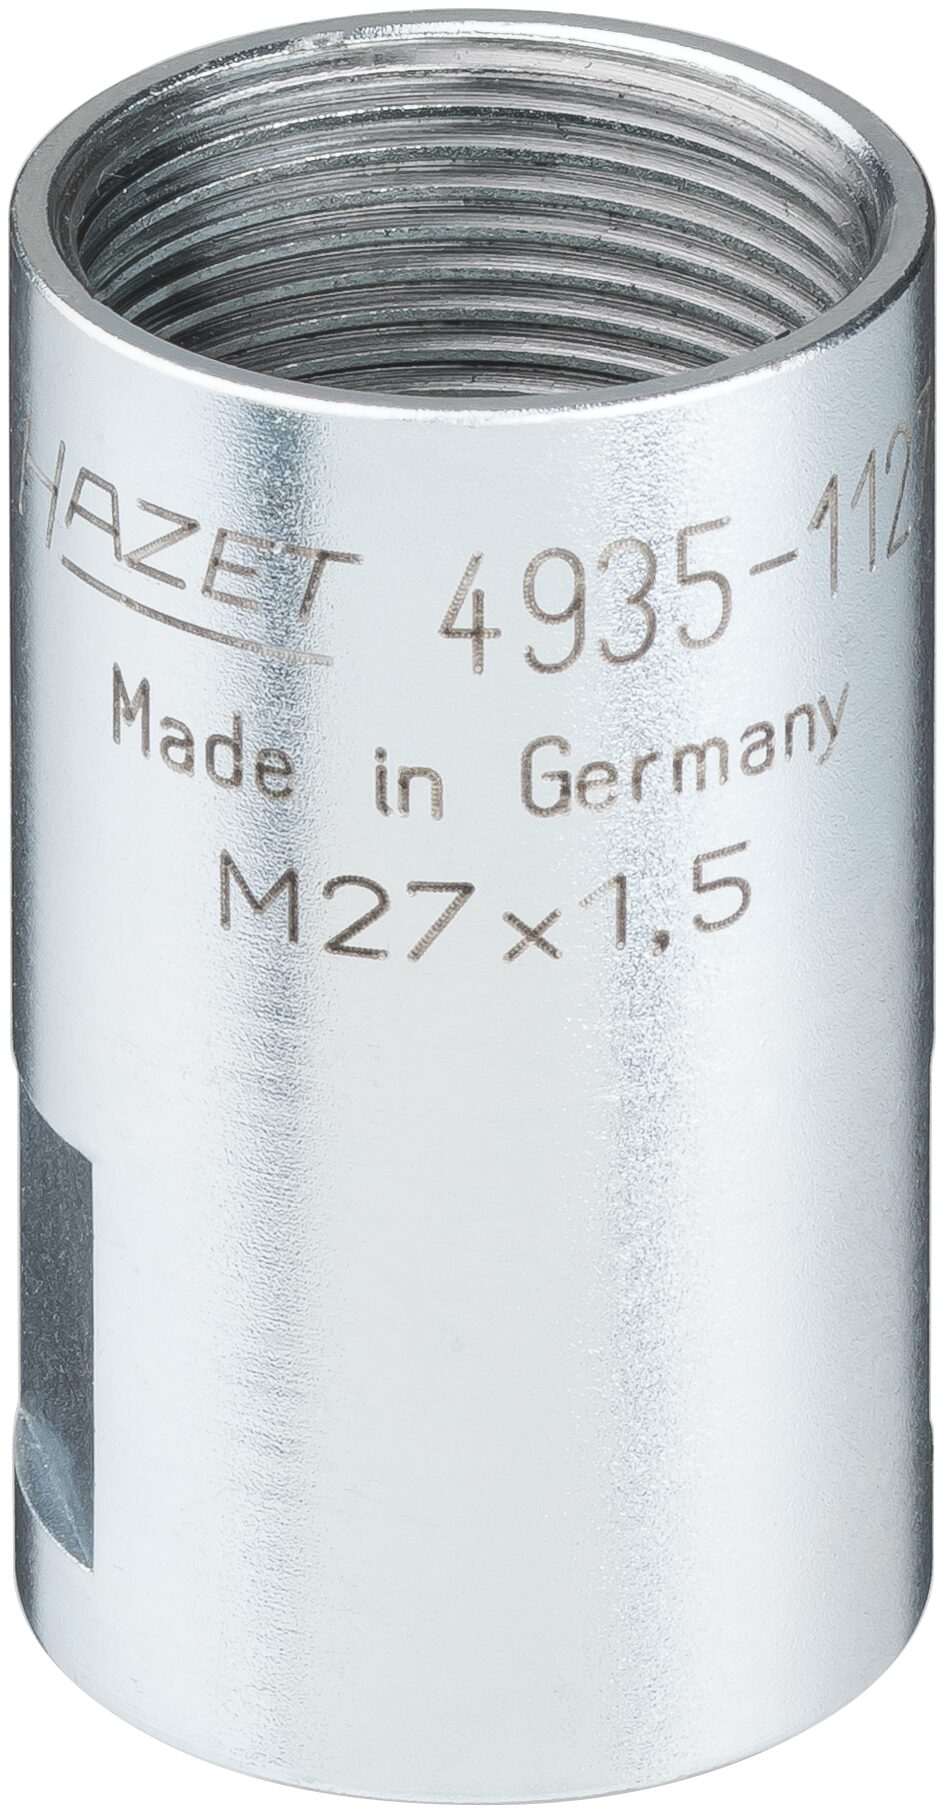 HAZET Ausziehhülse M27 x 1,5 4935-1127